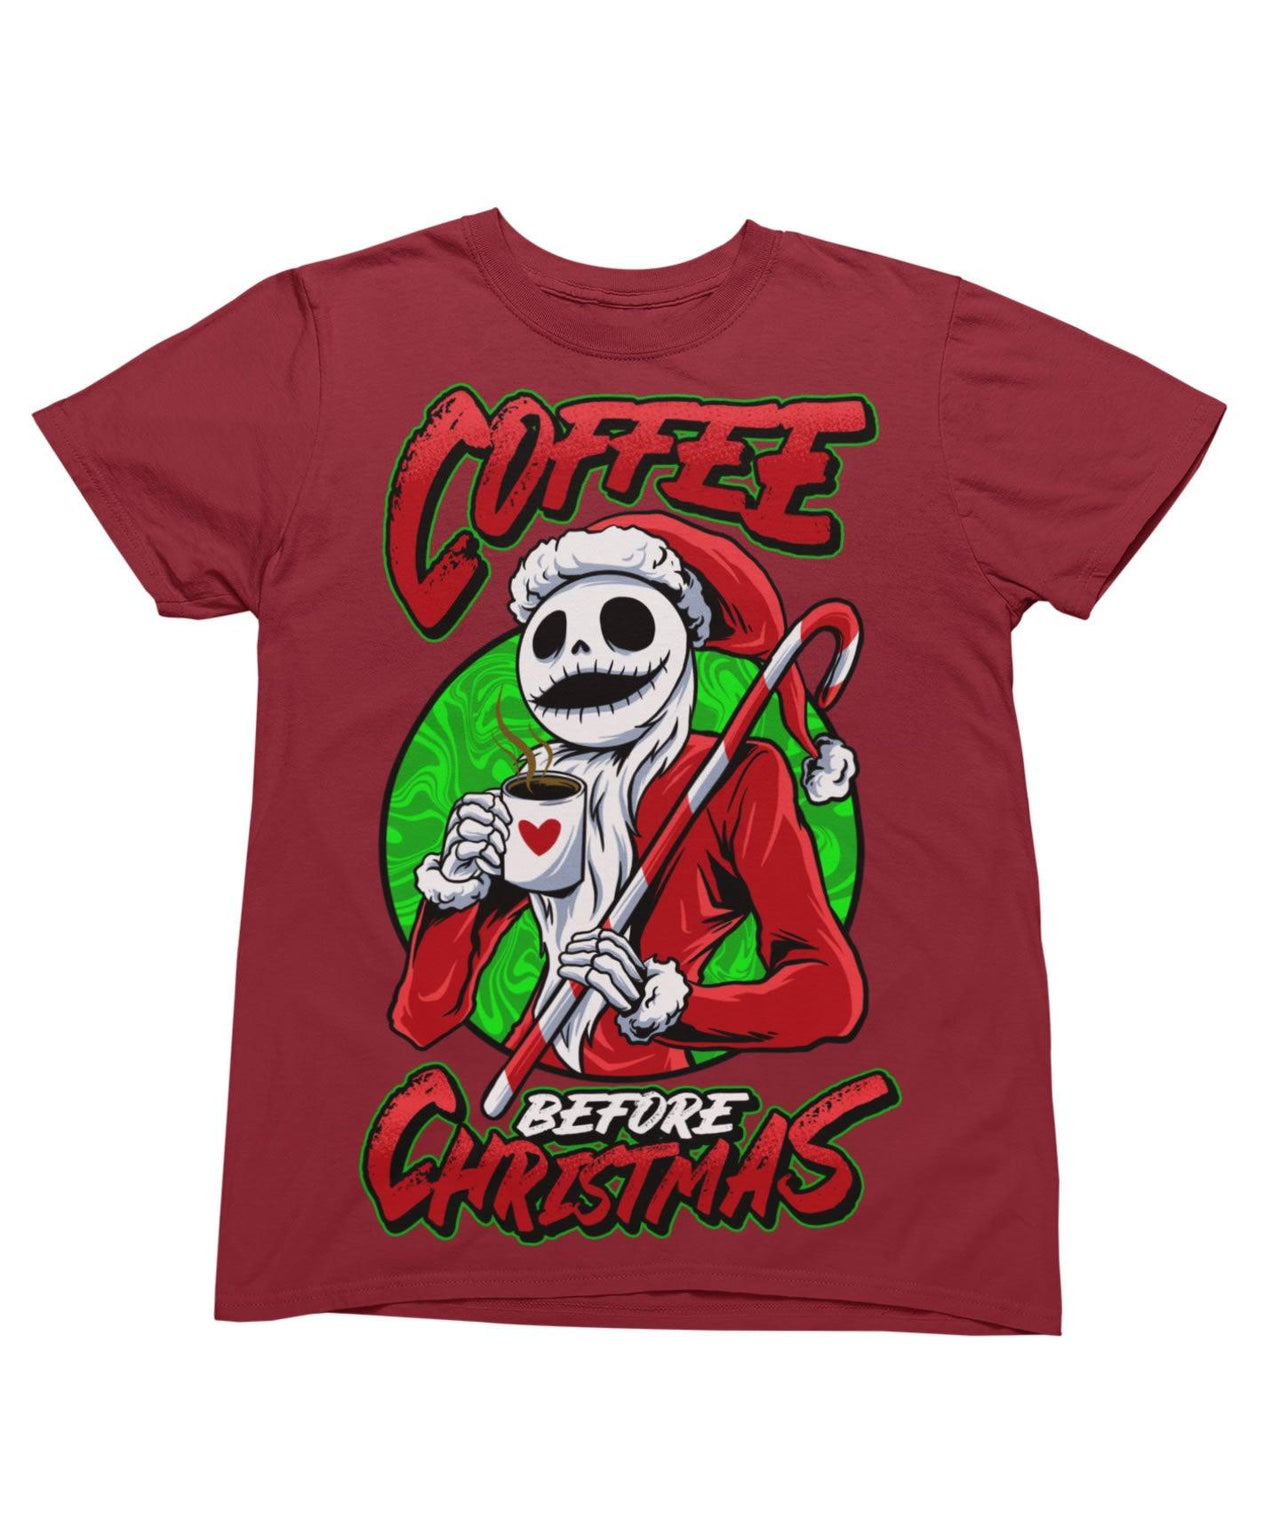 Coffee Before Christmas Unisex Mens Graphic T-Shirt 8Ball